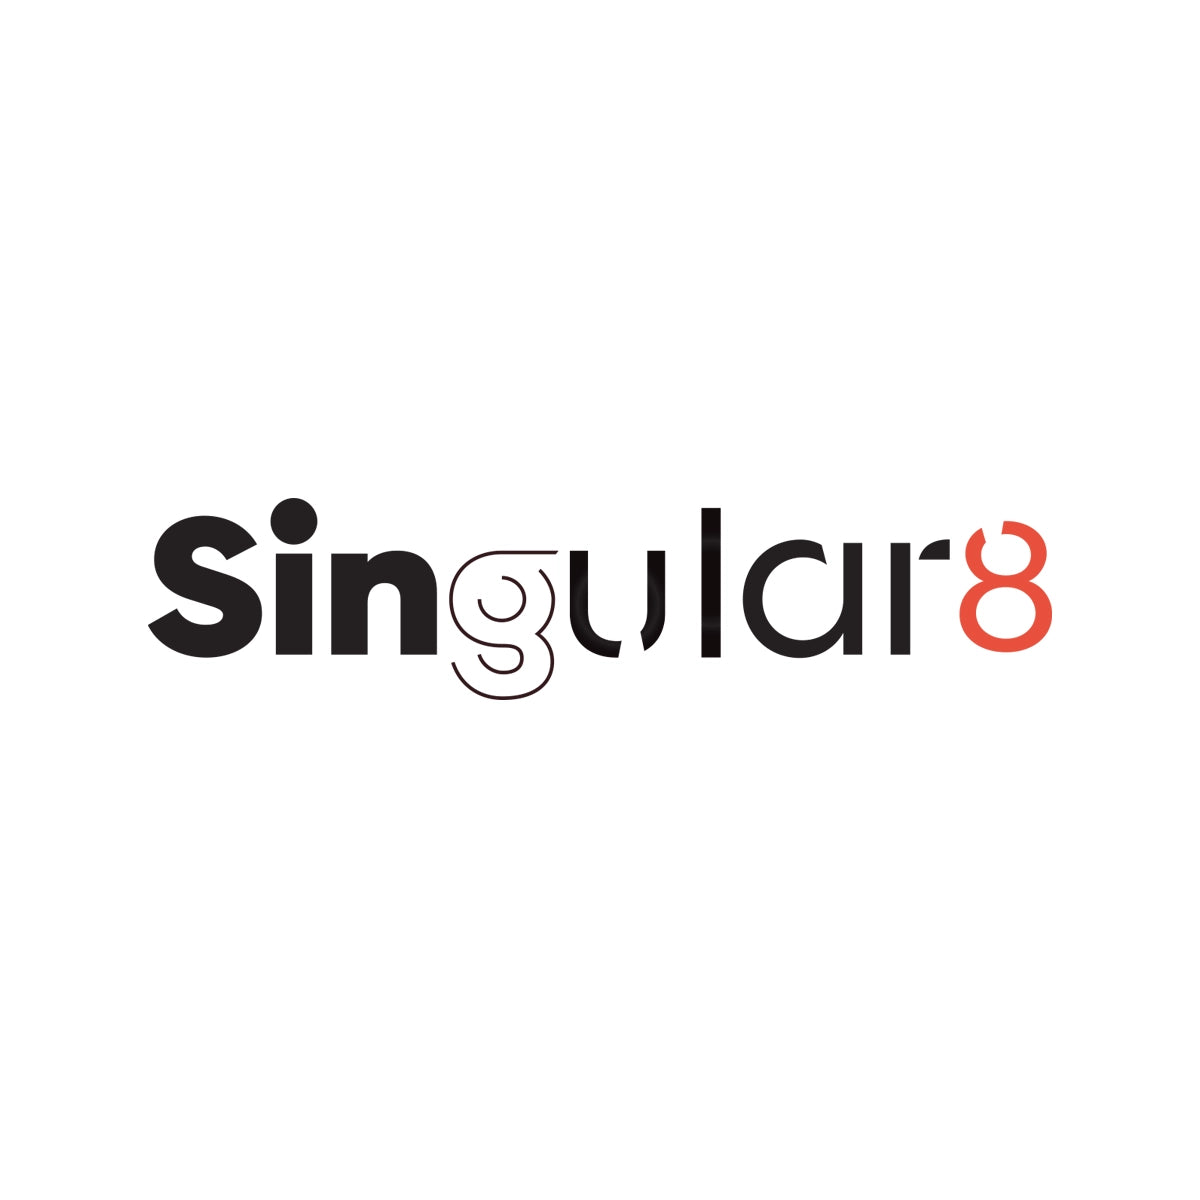 singular8.com